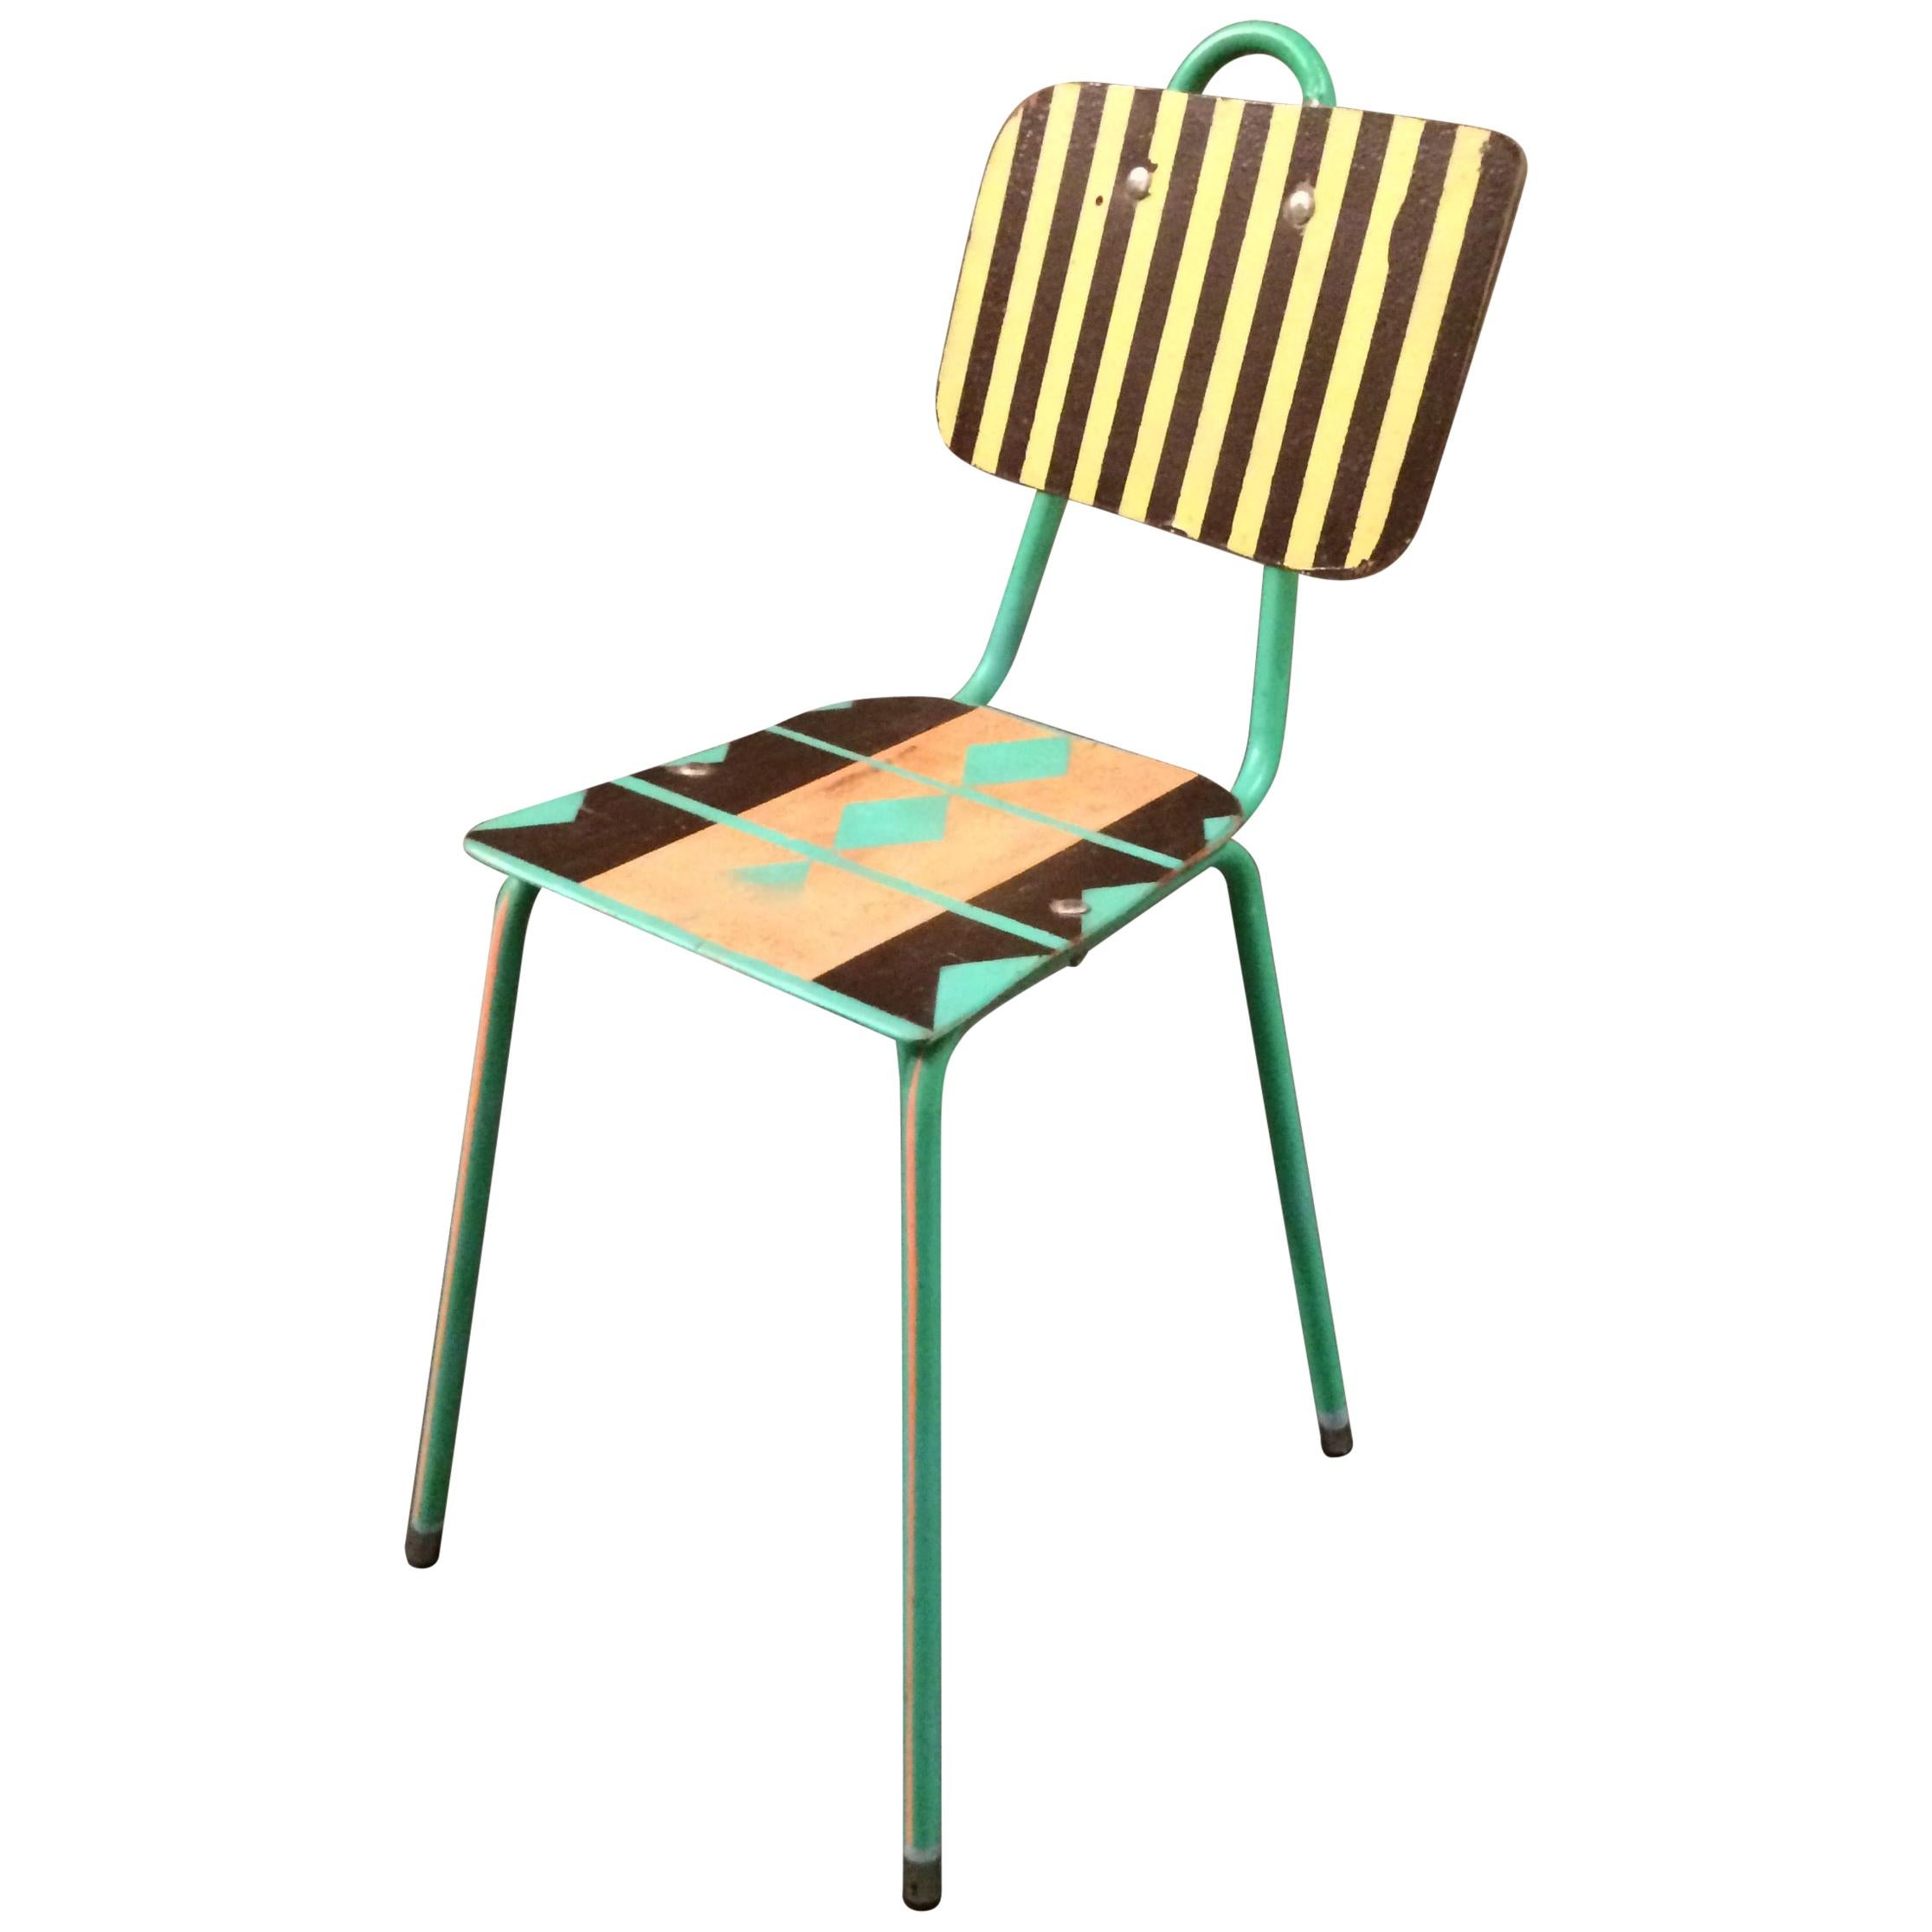 Dada Chair, functional art, by German Artist Markus Friedrich Staab For Sale